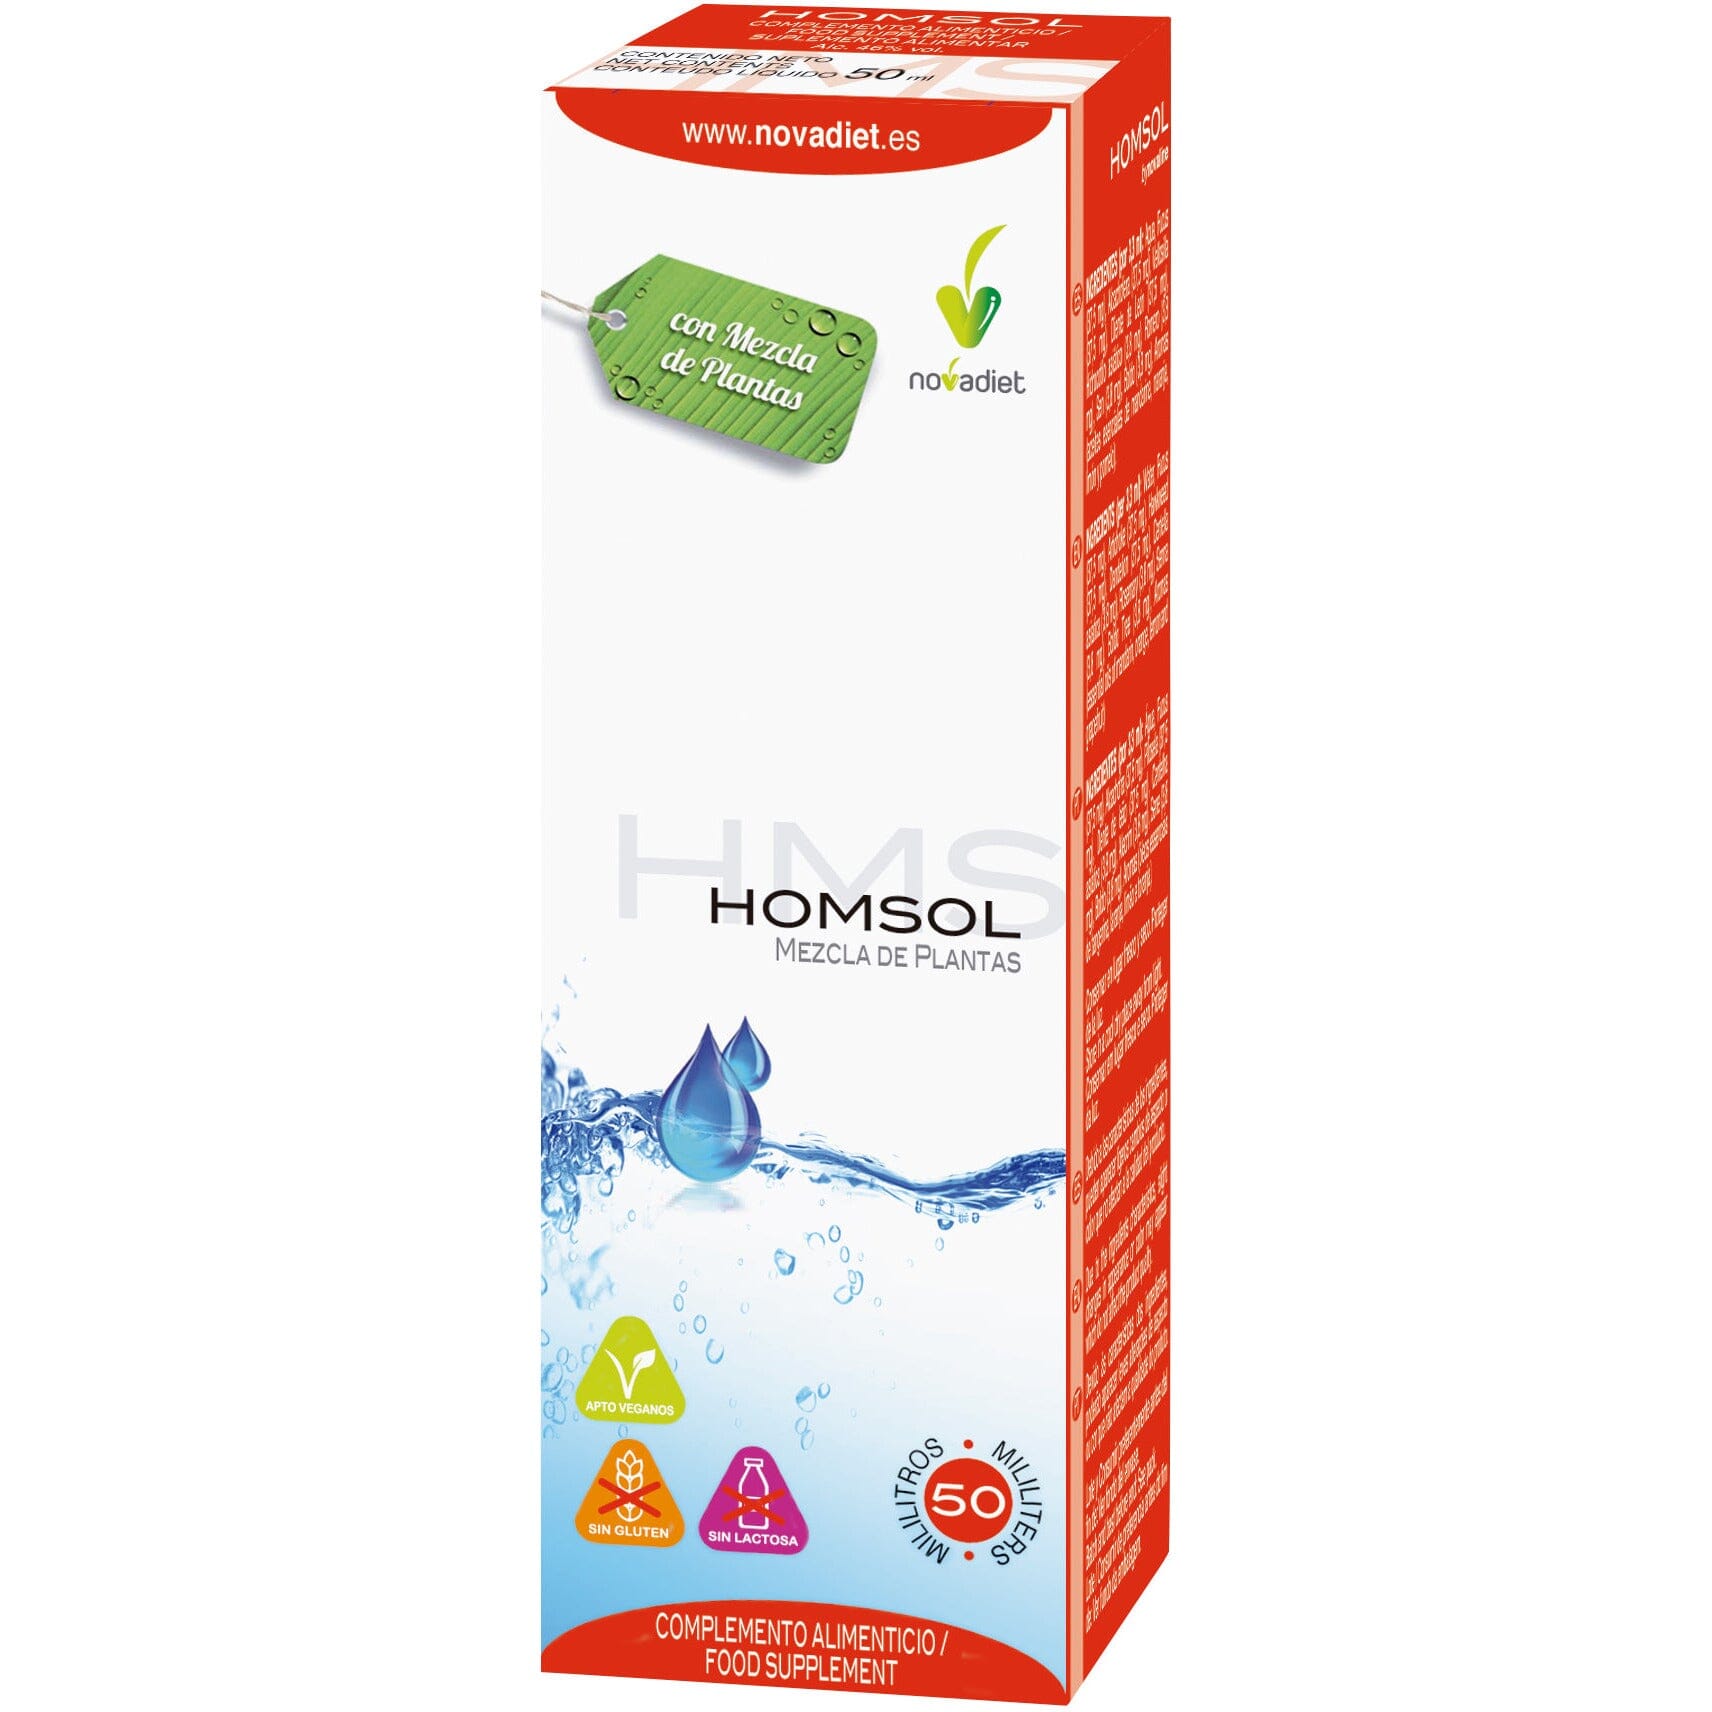 Homsol 50 ml | Novadiet - Dietetica Ferrer